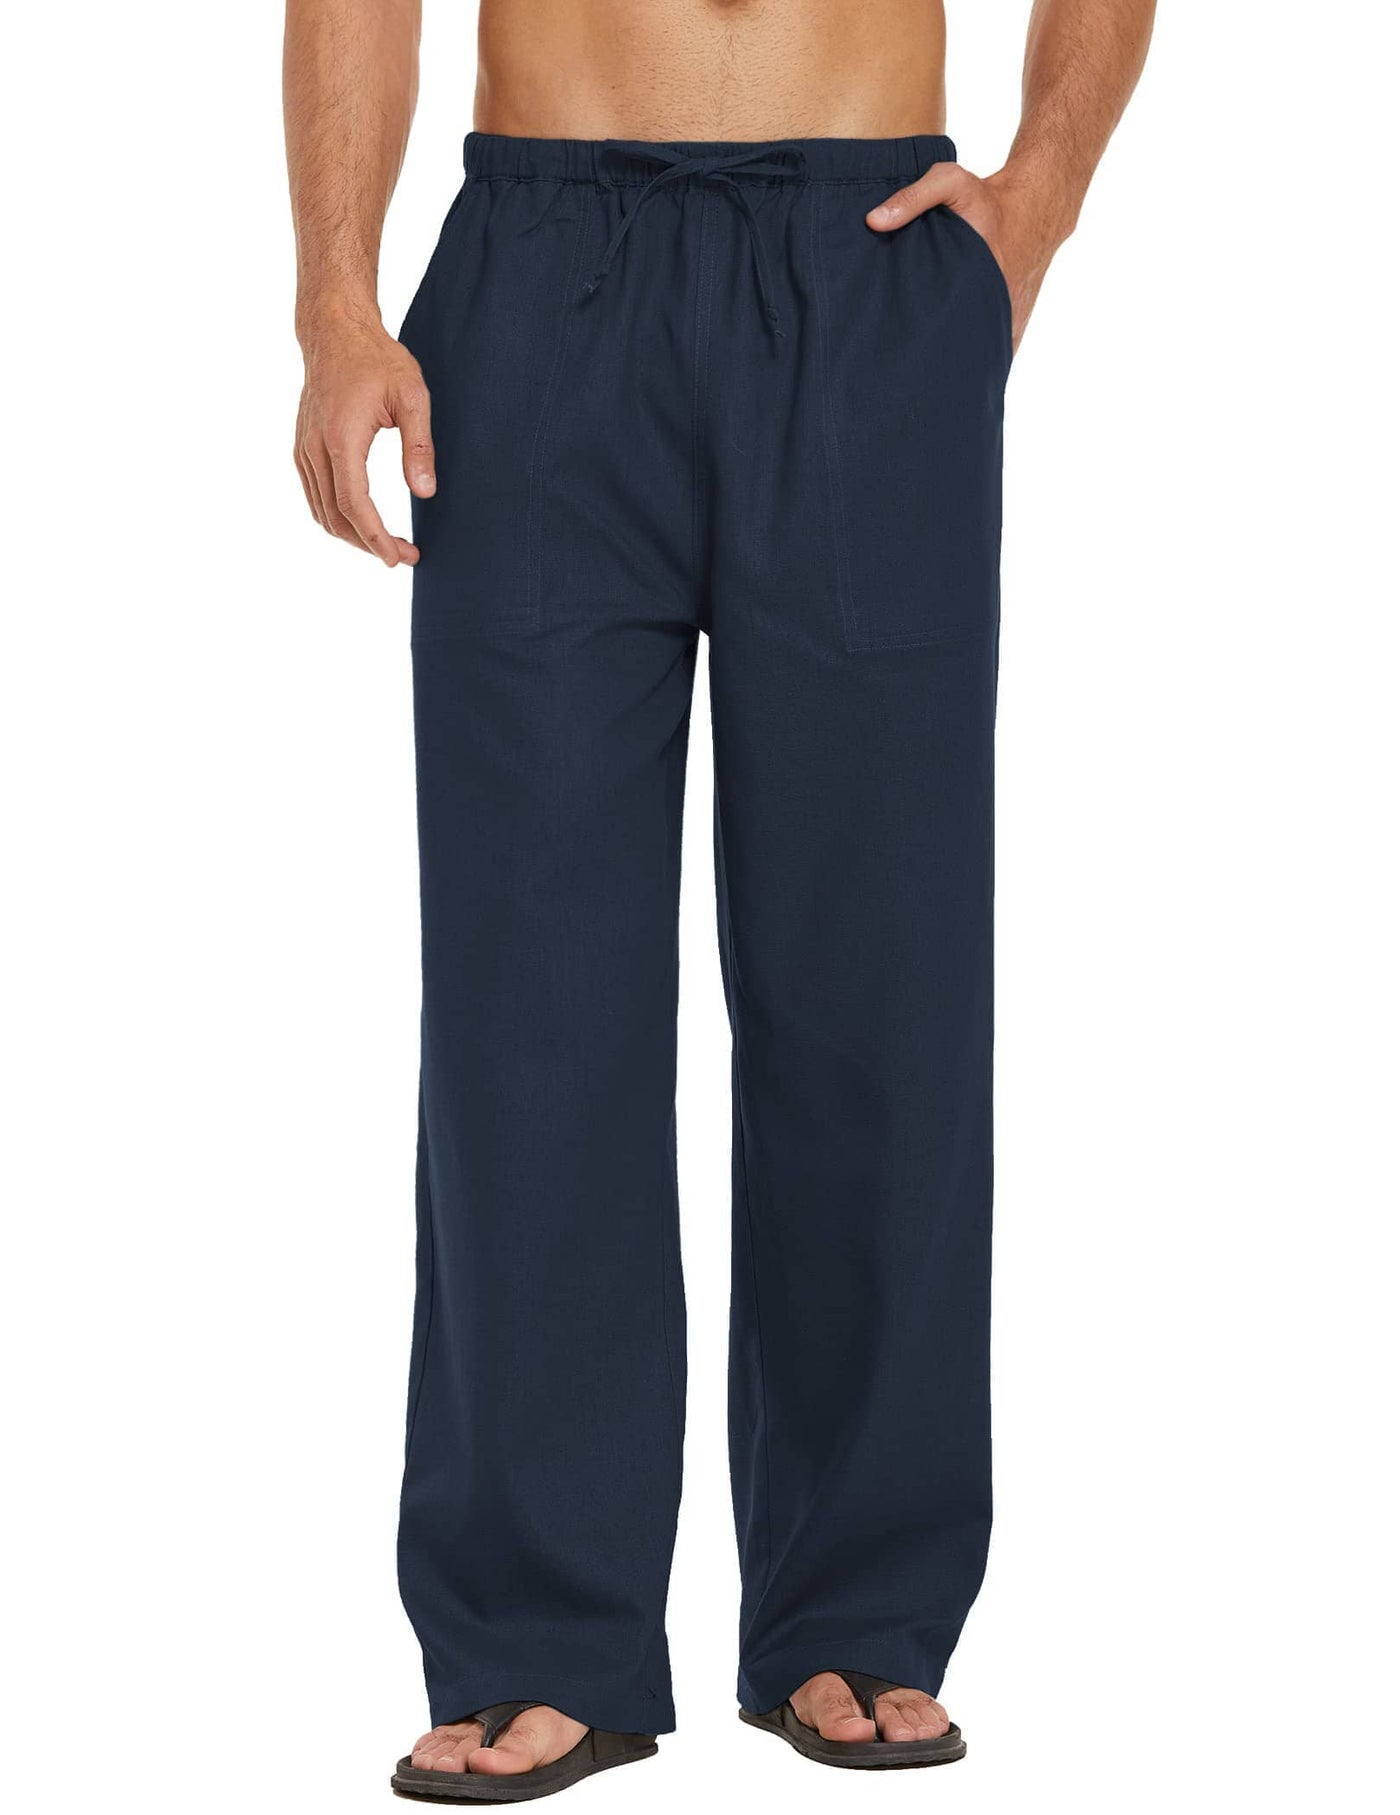 Coofandy Linen Style Loose Waist Yoga Pants (US Only) Pants coofandy Navy Blue S 